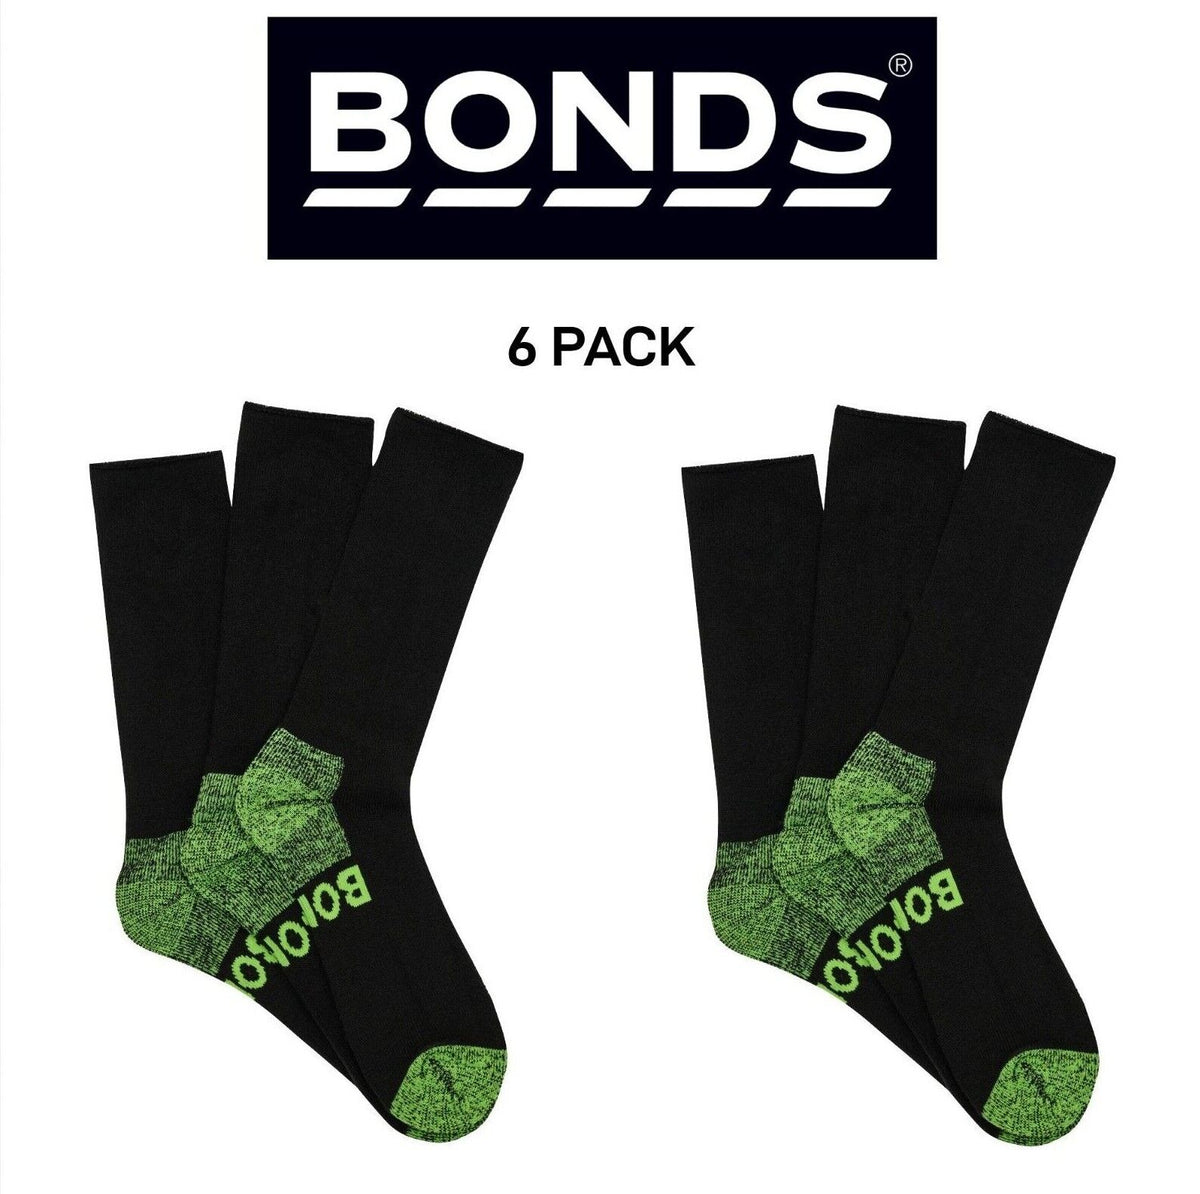 Bonds Mens Acrylic Work Socks Cushioned Soles Comfort Crew Length 6 Pack SYUU3G